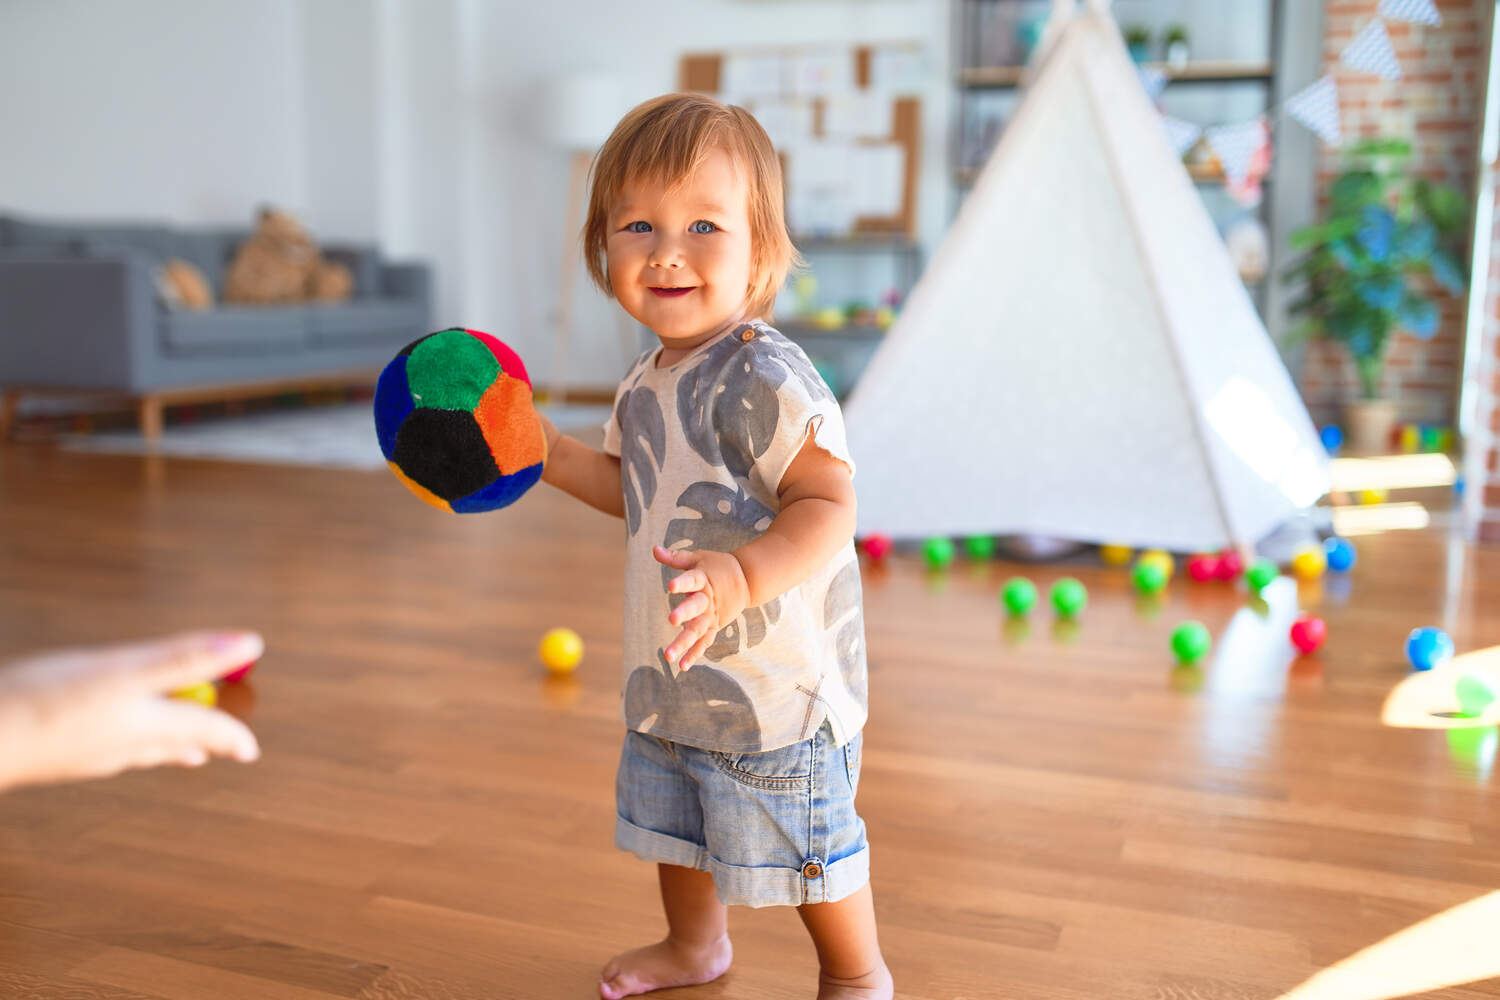 A toddler throwing ball